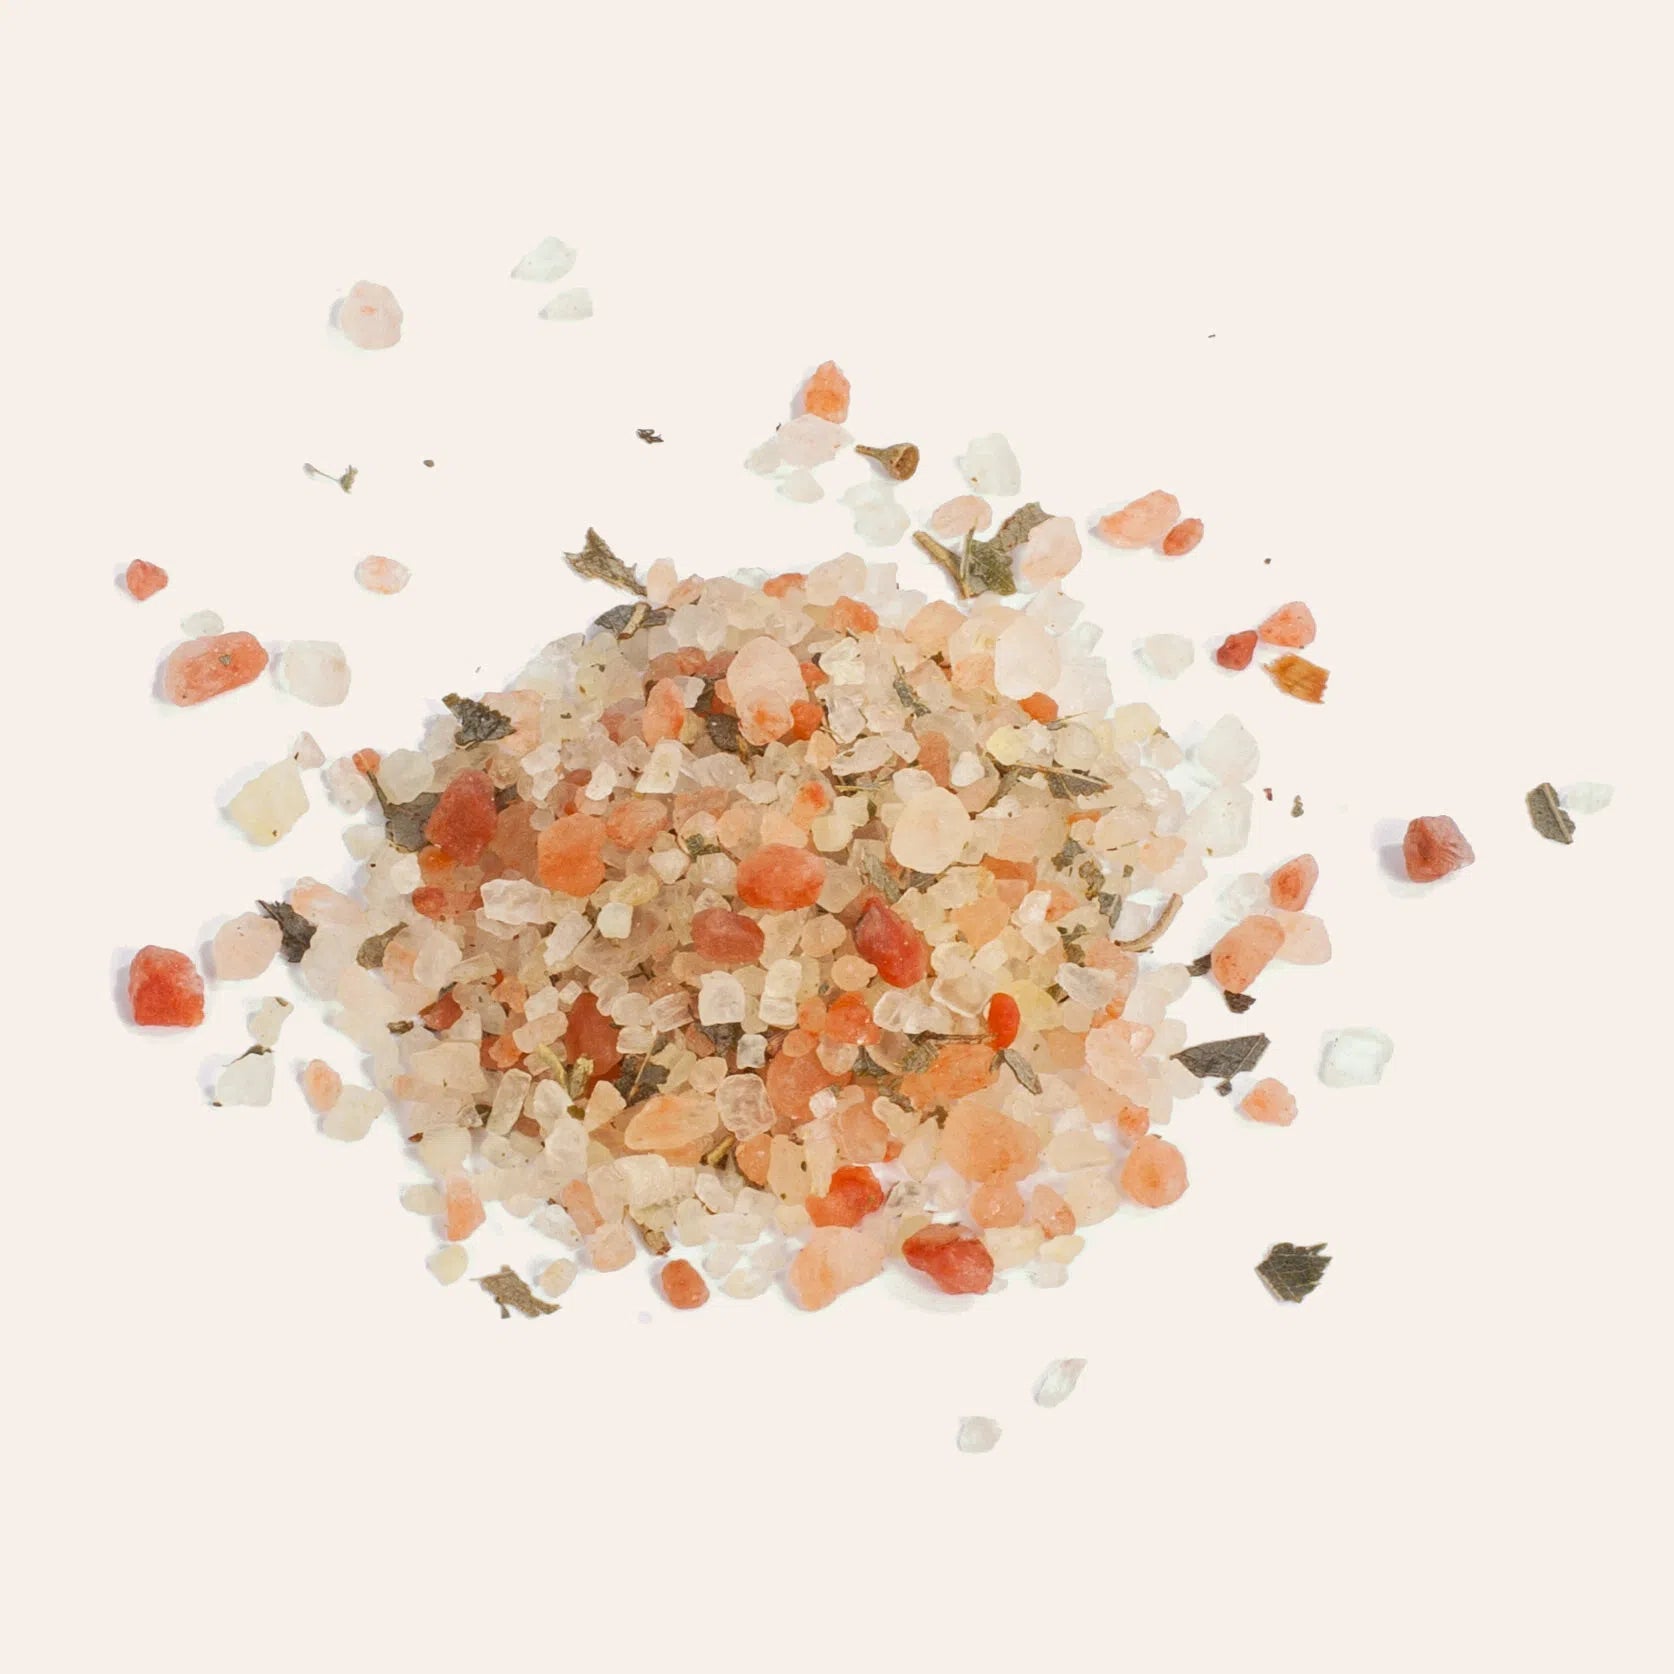 equilibre sels de bain cbd eucalyptus sel himalaya, texture grains de sel transparents, blancs, oranges, roses, feuilles d'eucalyptus